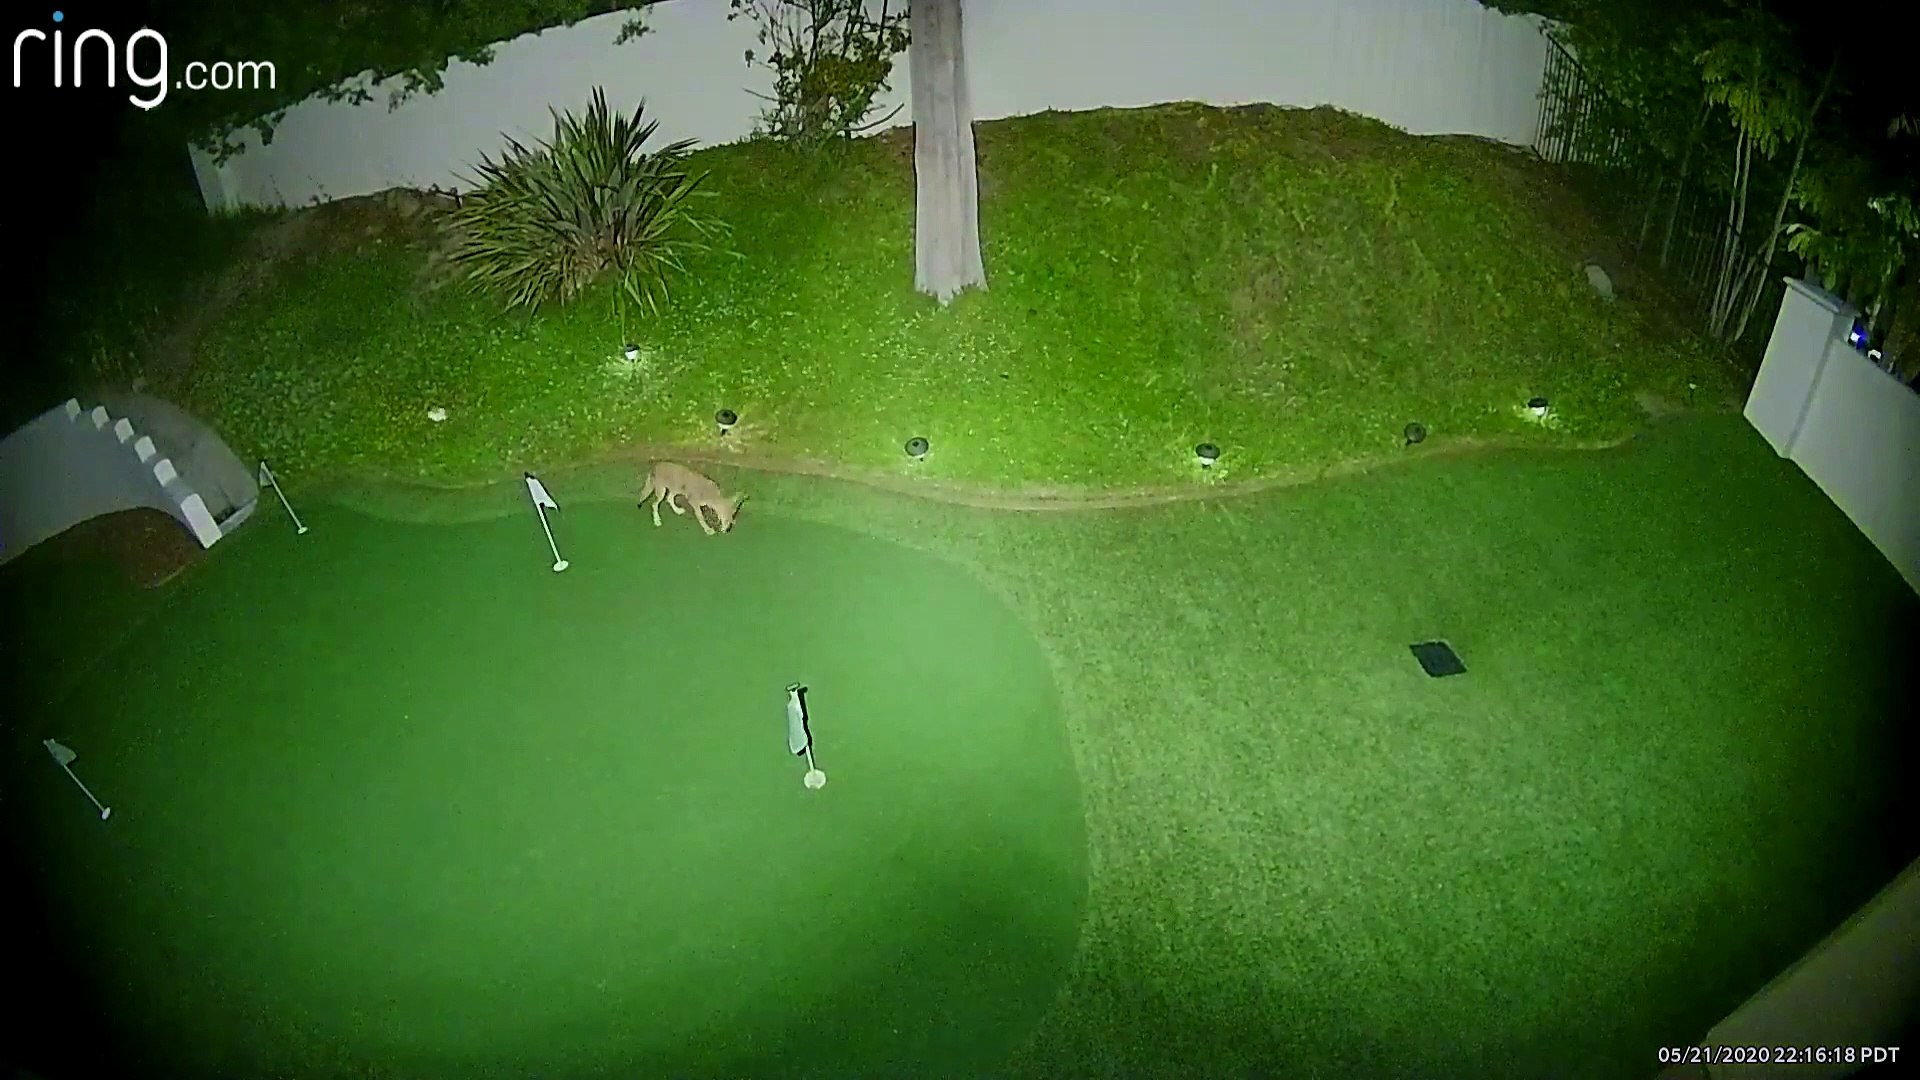 Coyote Playing Golf in Backyard